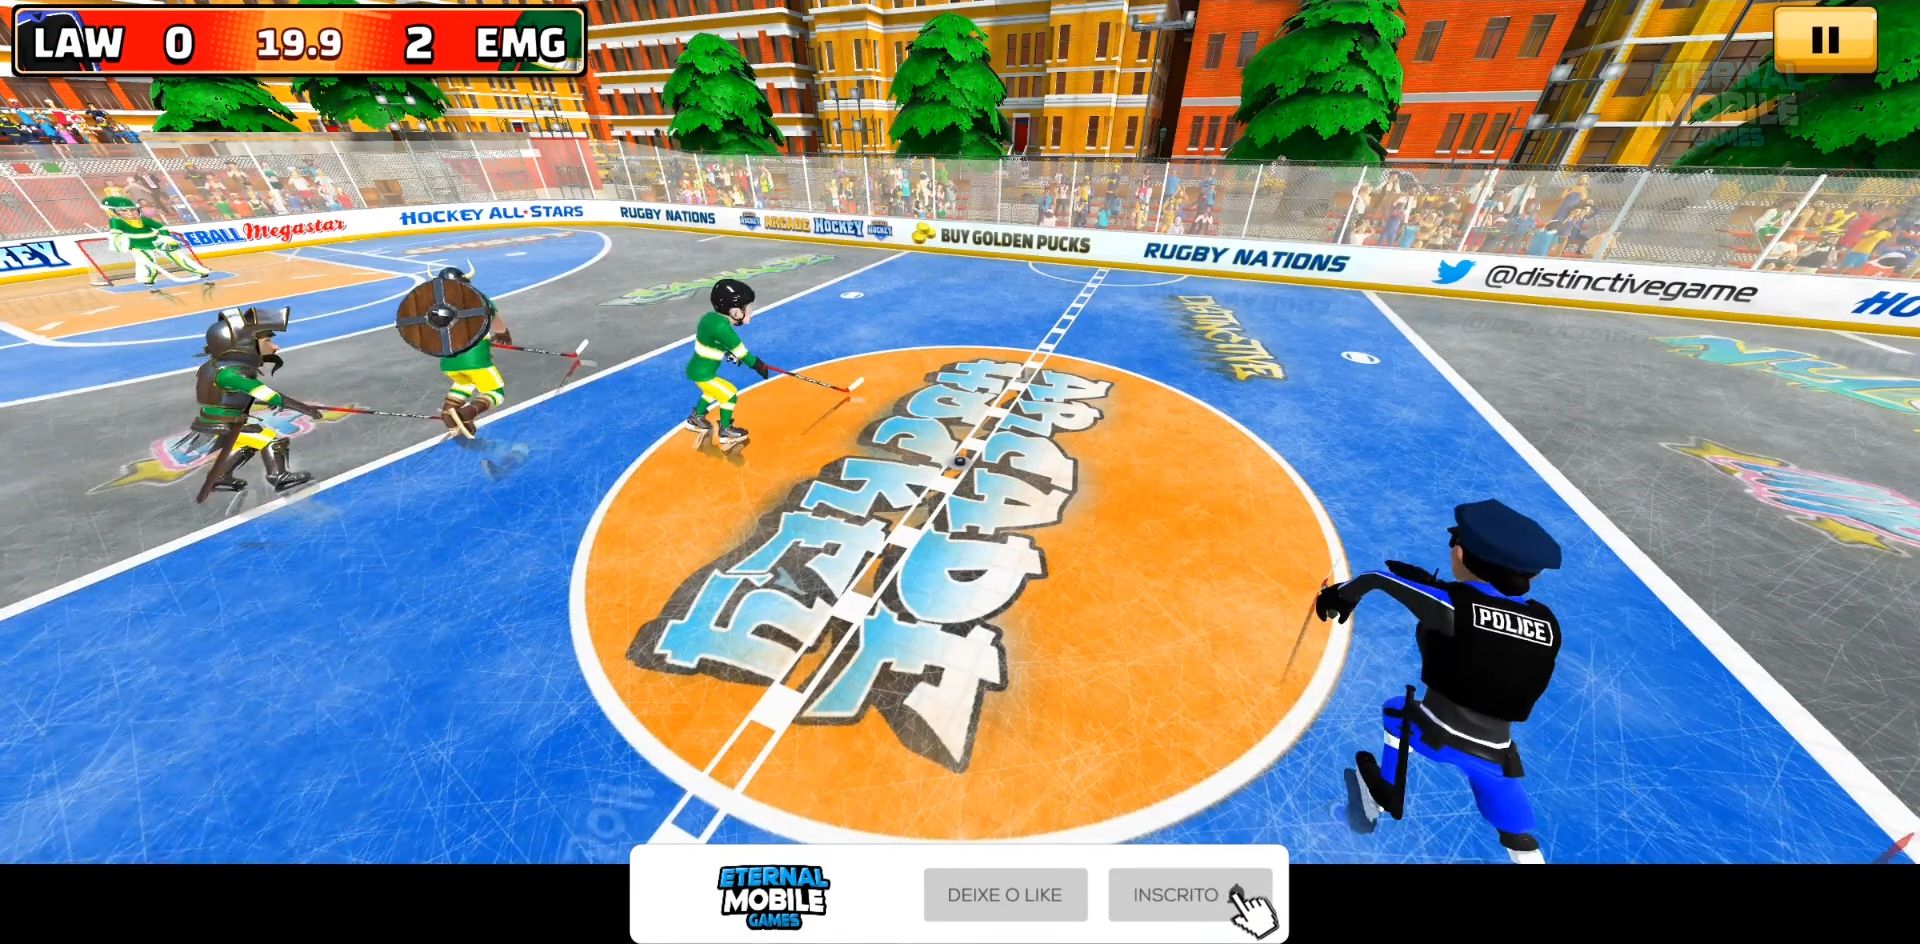 Arcade Hockey 21 screenshot 1